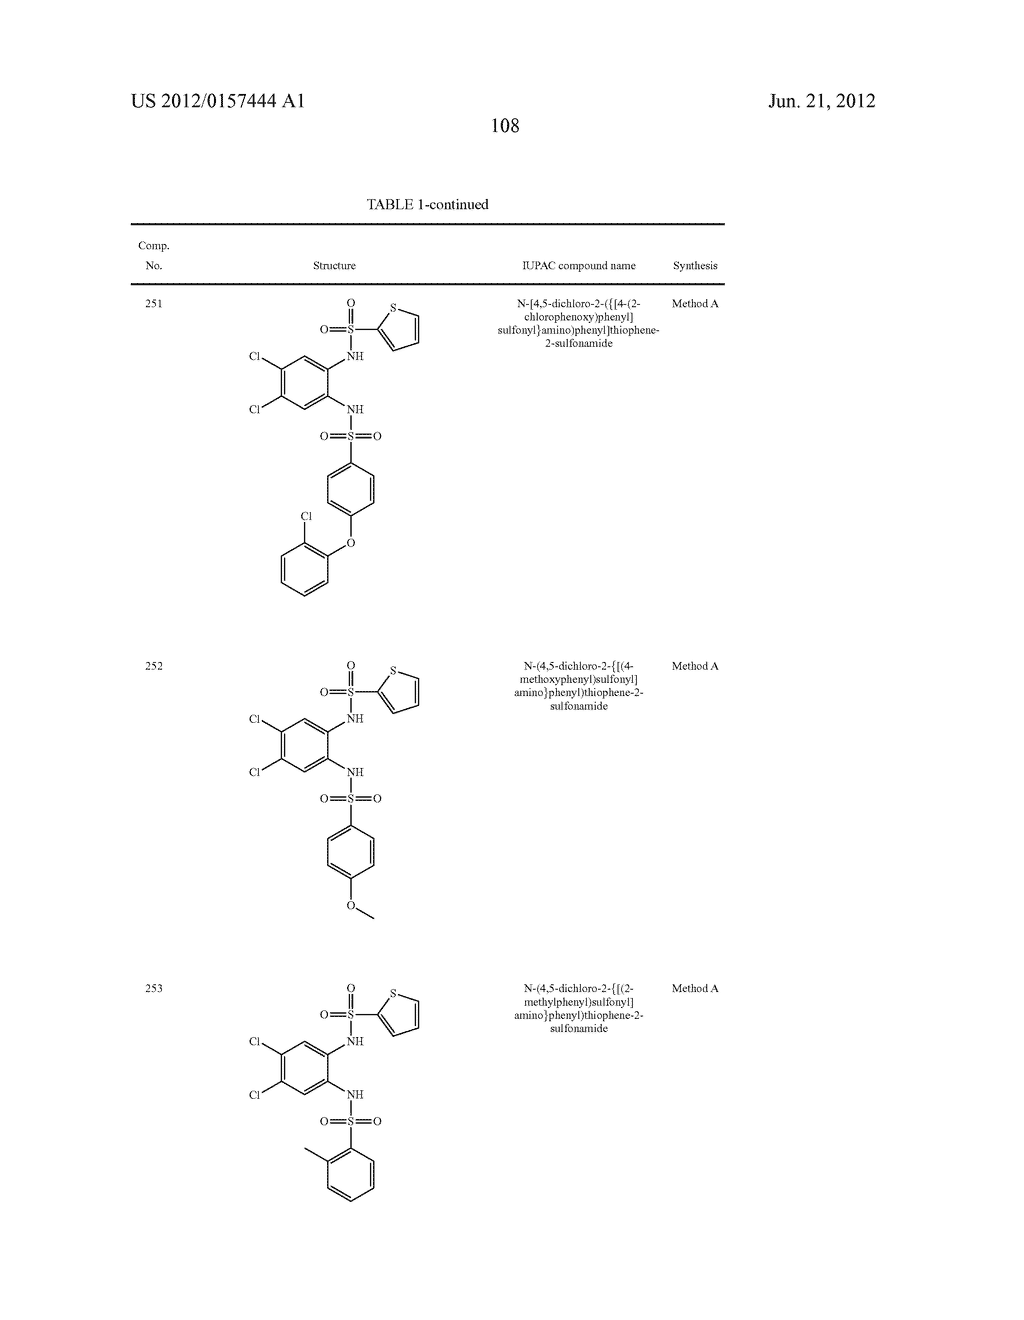 NOVEL 1,2- BIS-SULFONAMIDE DERIVATIVES AS CHEMOKINE RECEPTOR MODULATORS - diagram, schematic, and image 109